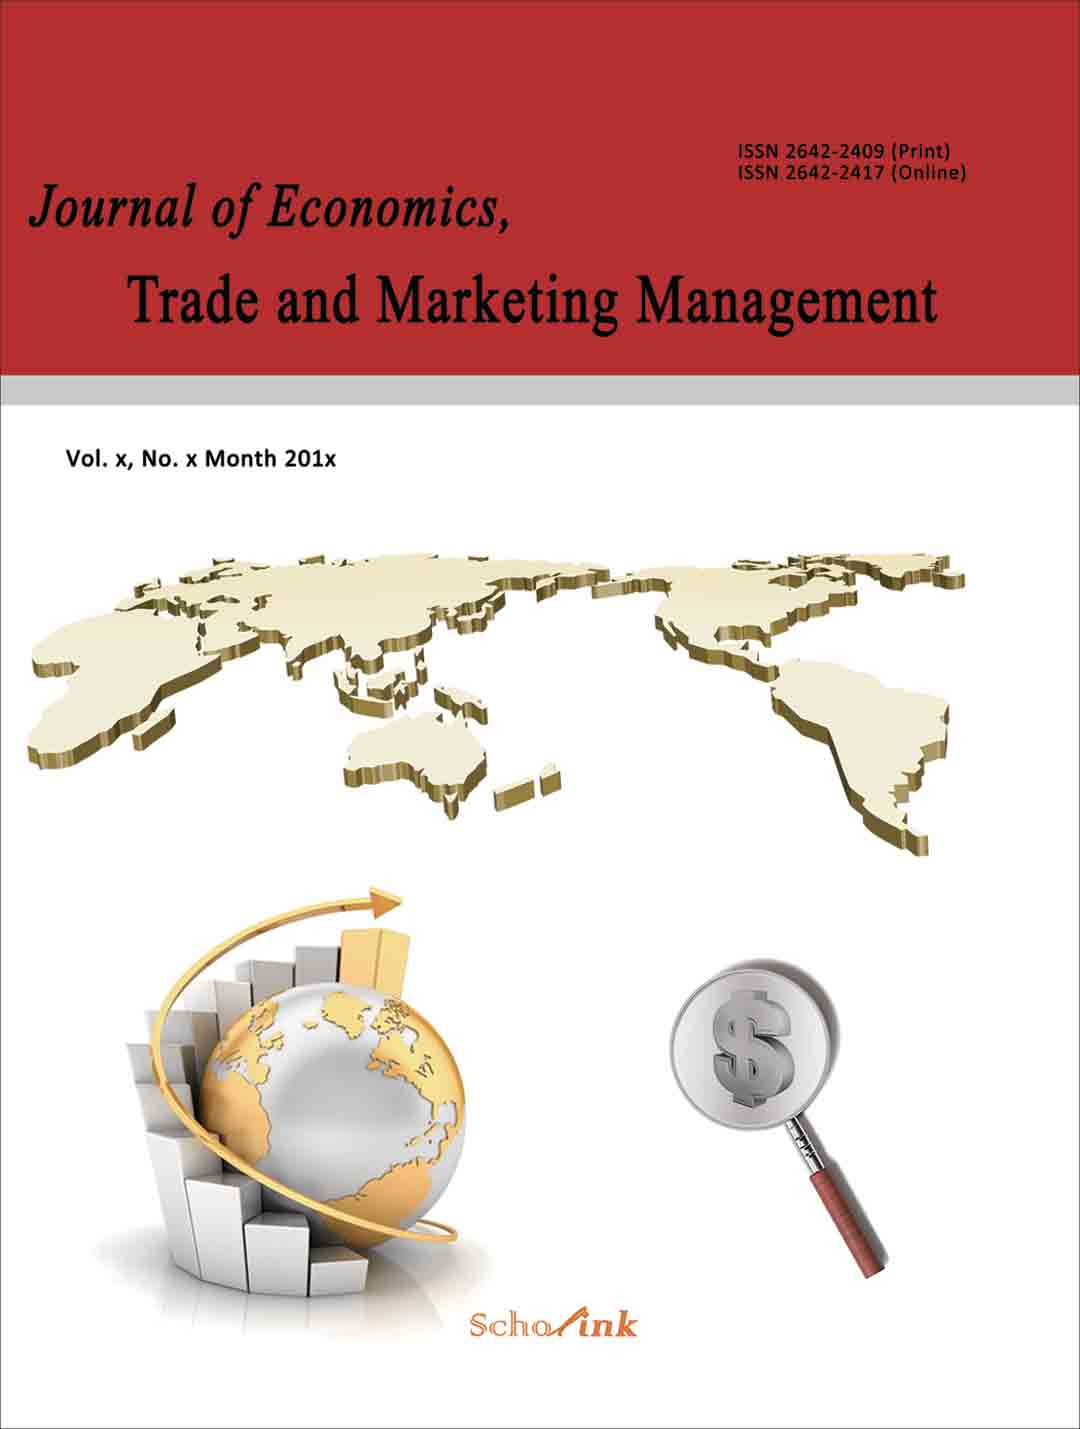 Journal of Economics, Trade and Marketing Management《经济、贸易和营销管理杂志》